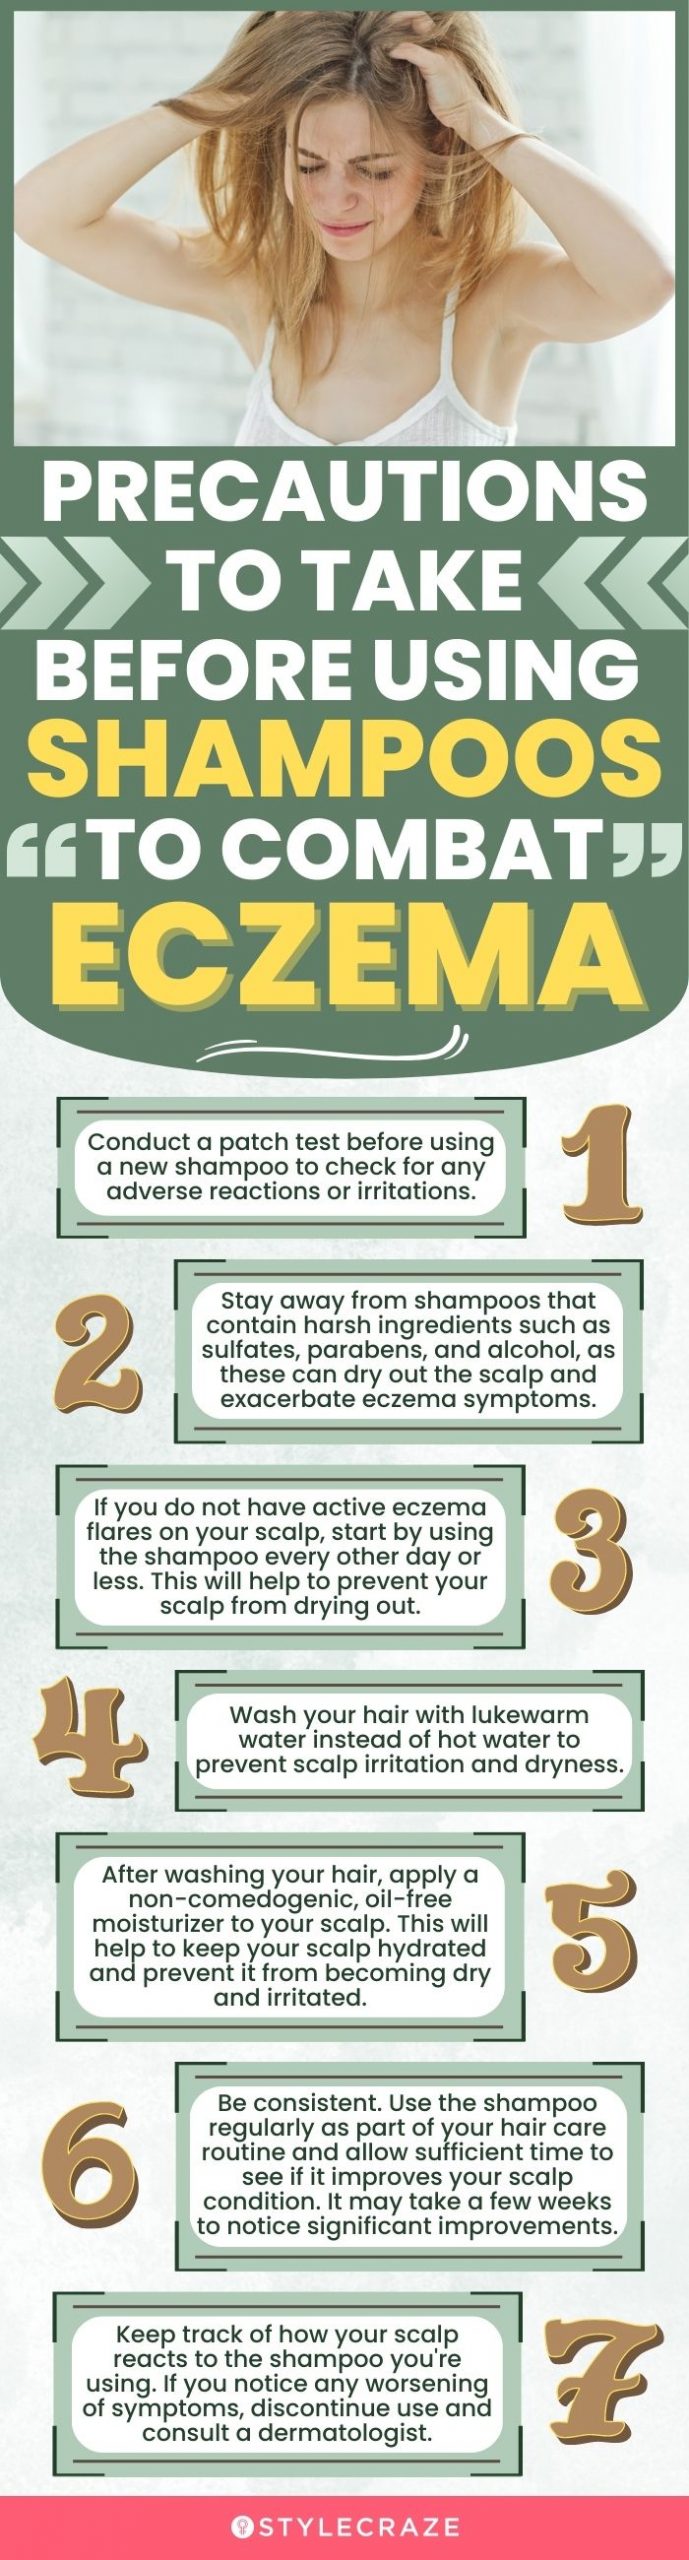 Precautions To Take Before Using Shampoos To Combat Eczema (infographic)